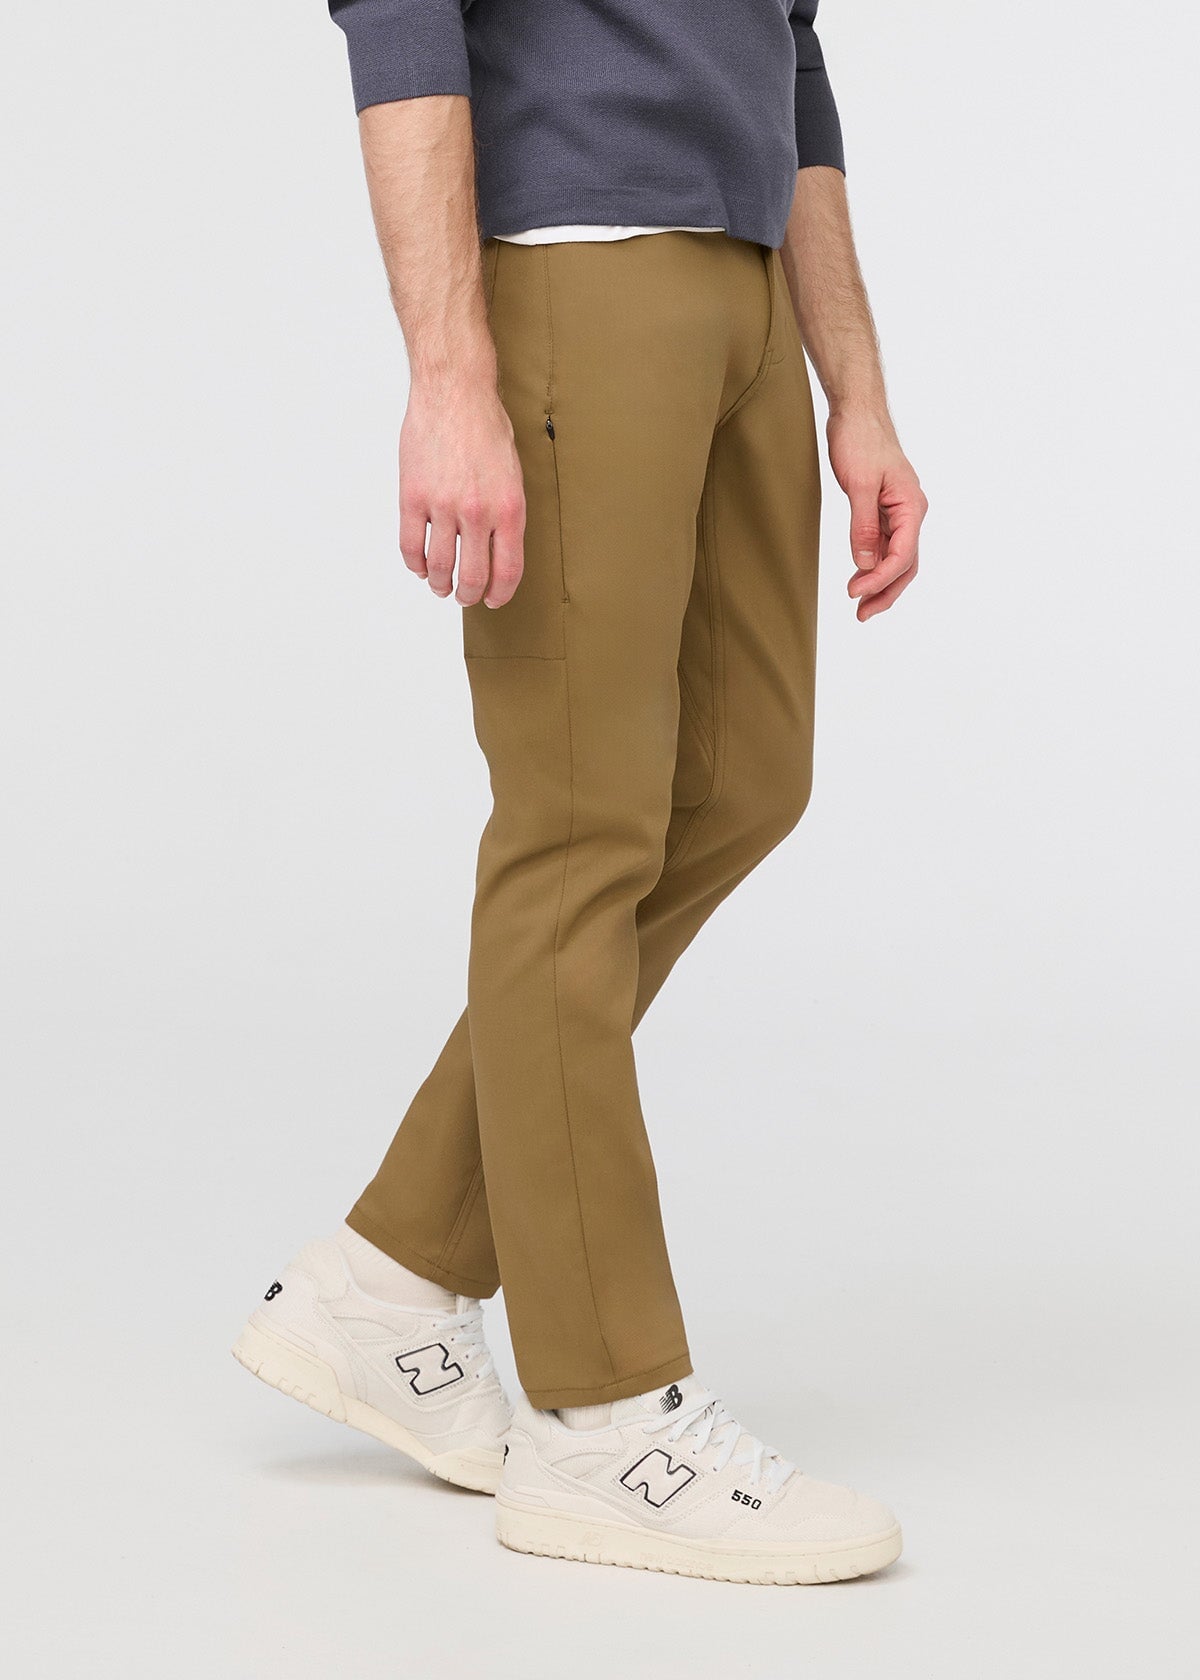 Essentials Men's Straight-Fit 5-Pocket Stretch Twill Pant